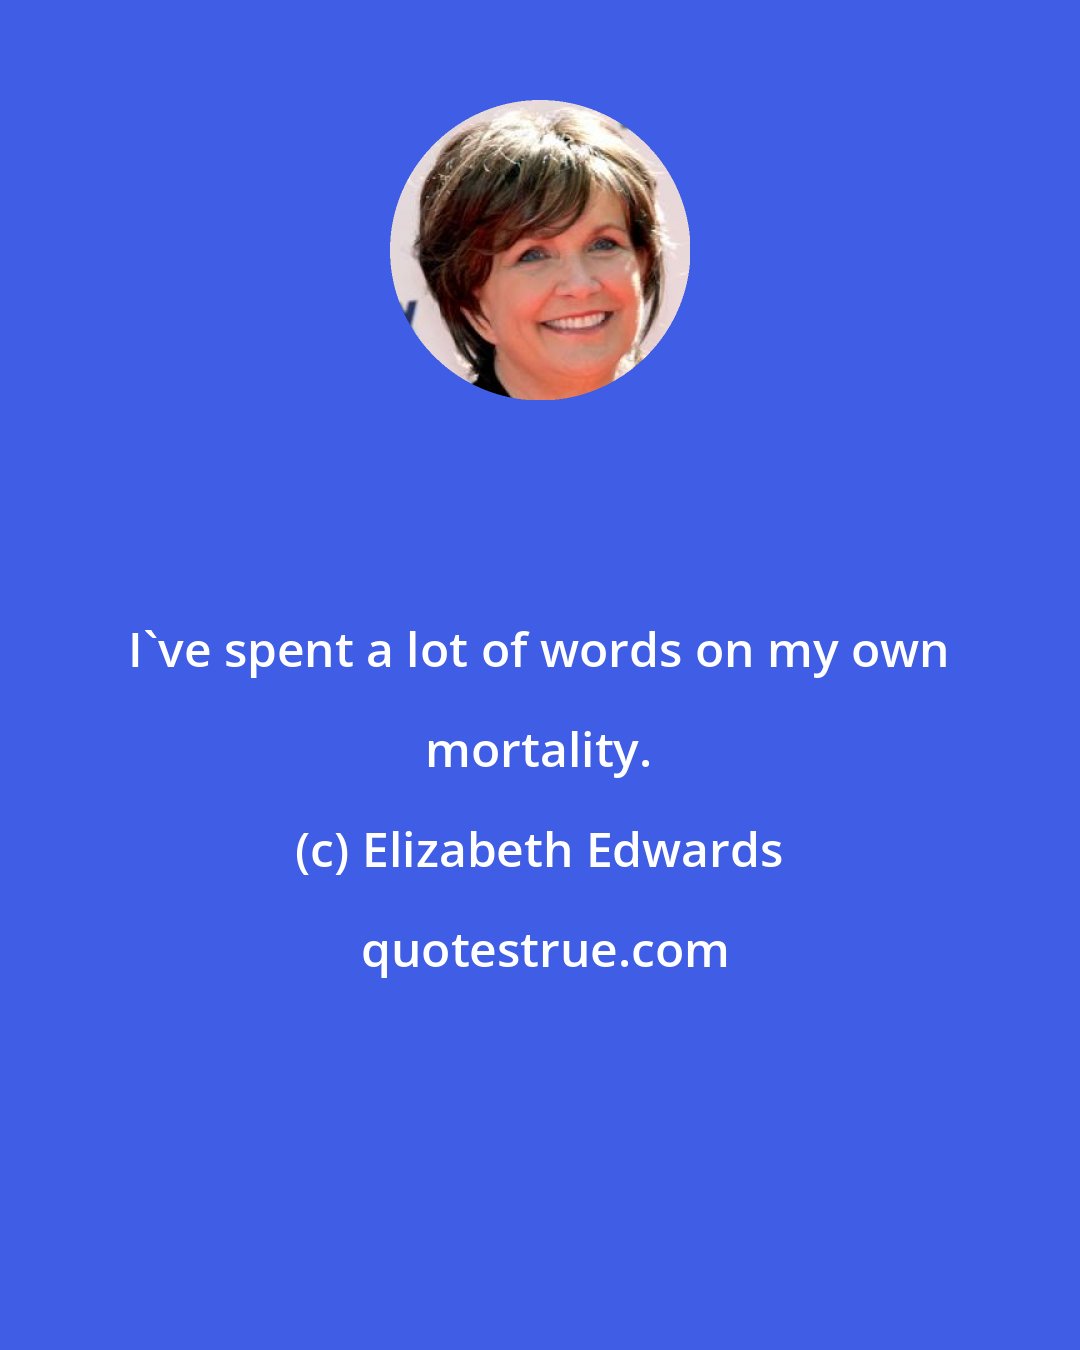 Elizabeth Edwards: I've spent a lot of words on my own mortality.